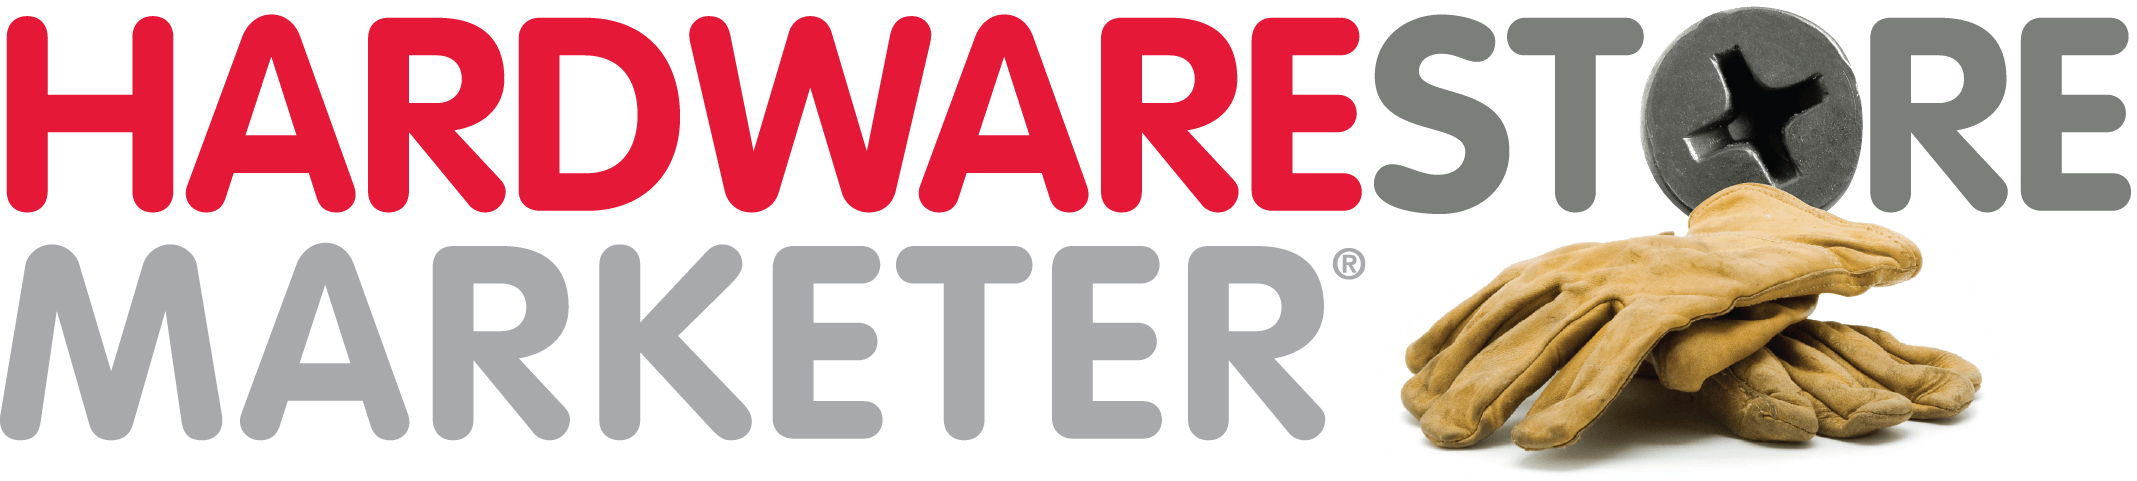 Hardware Store Marketer logo